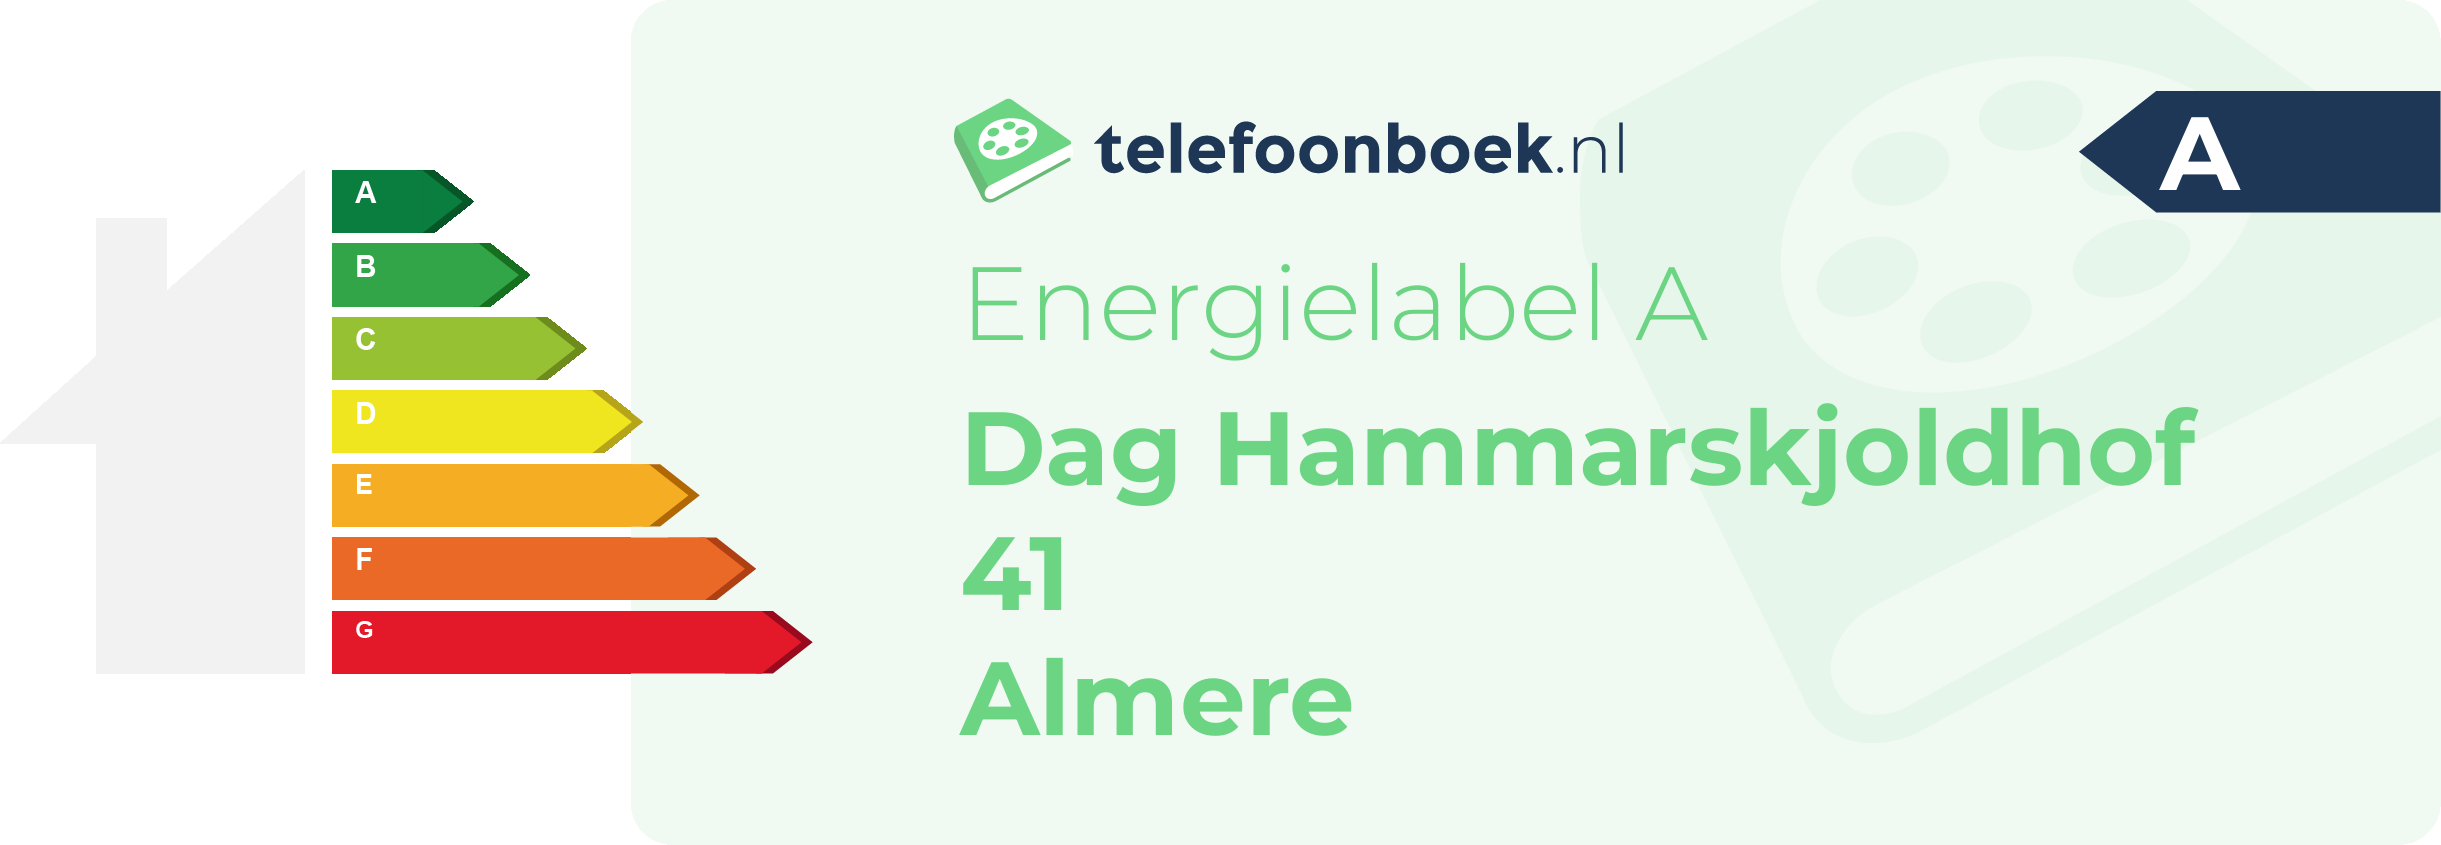 Energielabel Dag Hammarskjoldhof 41 Almere